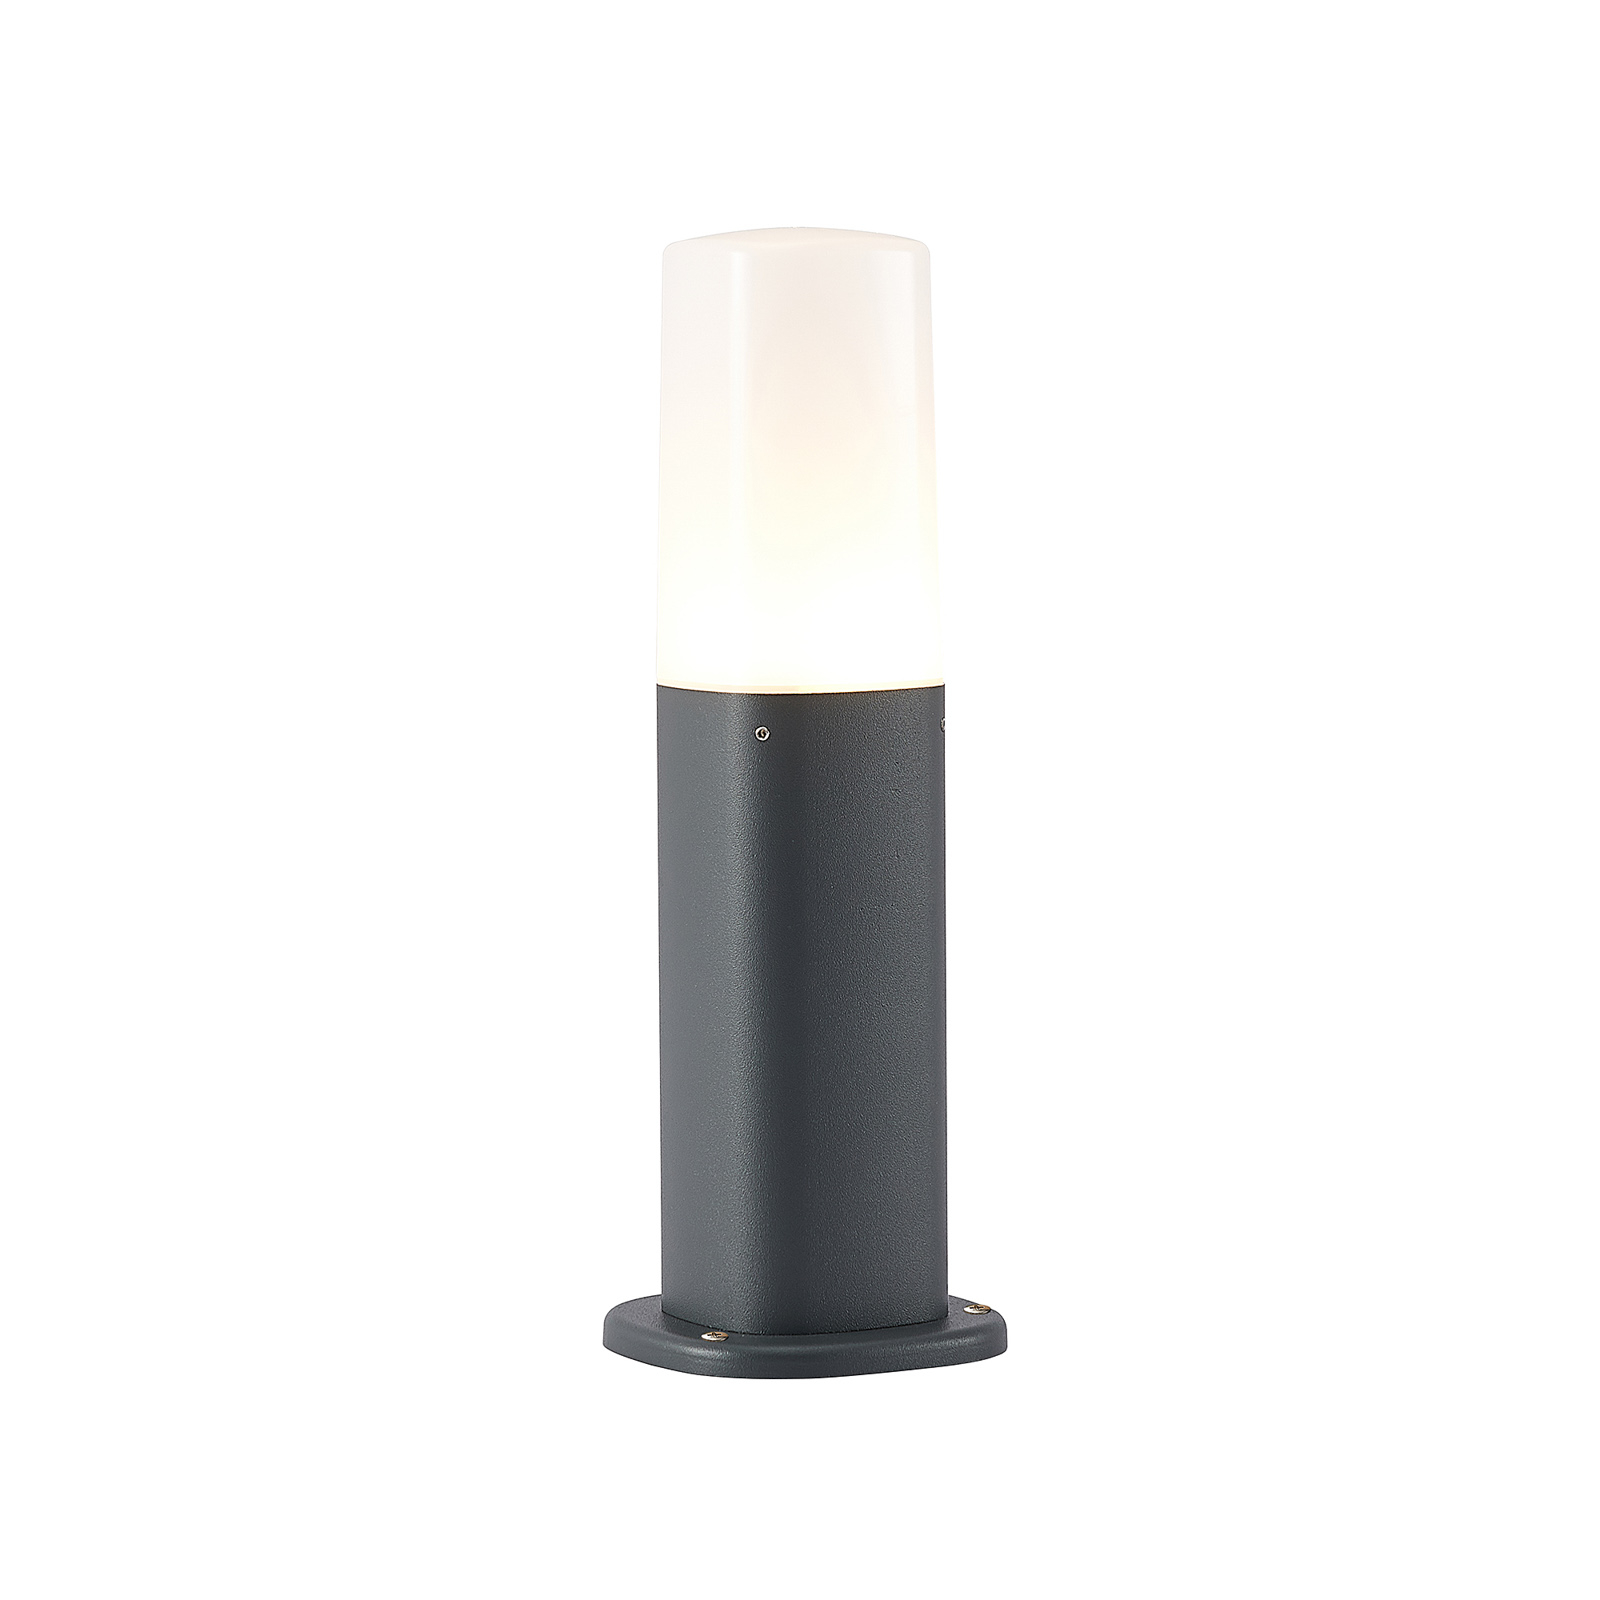 Lucande Eibo pillar light, height 30 cm